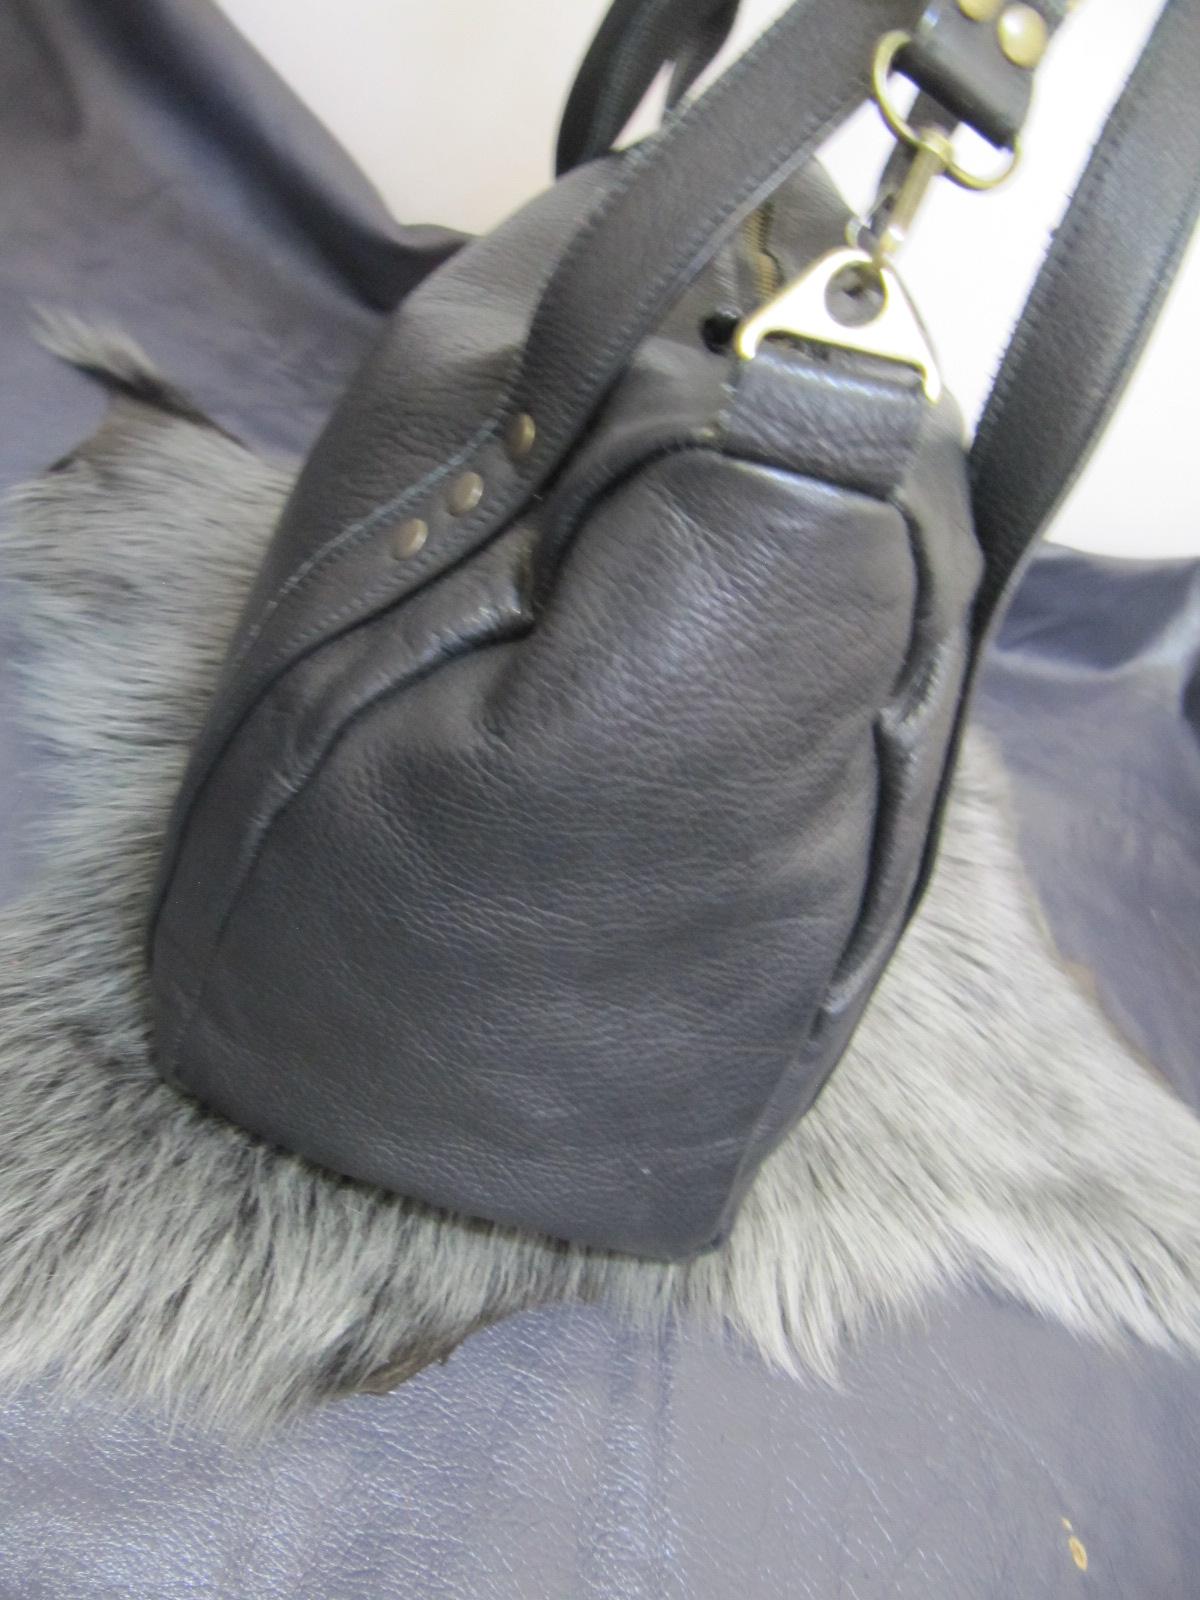 Black leather Bowling style handbag